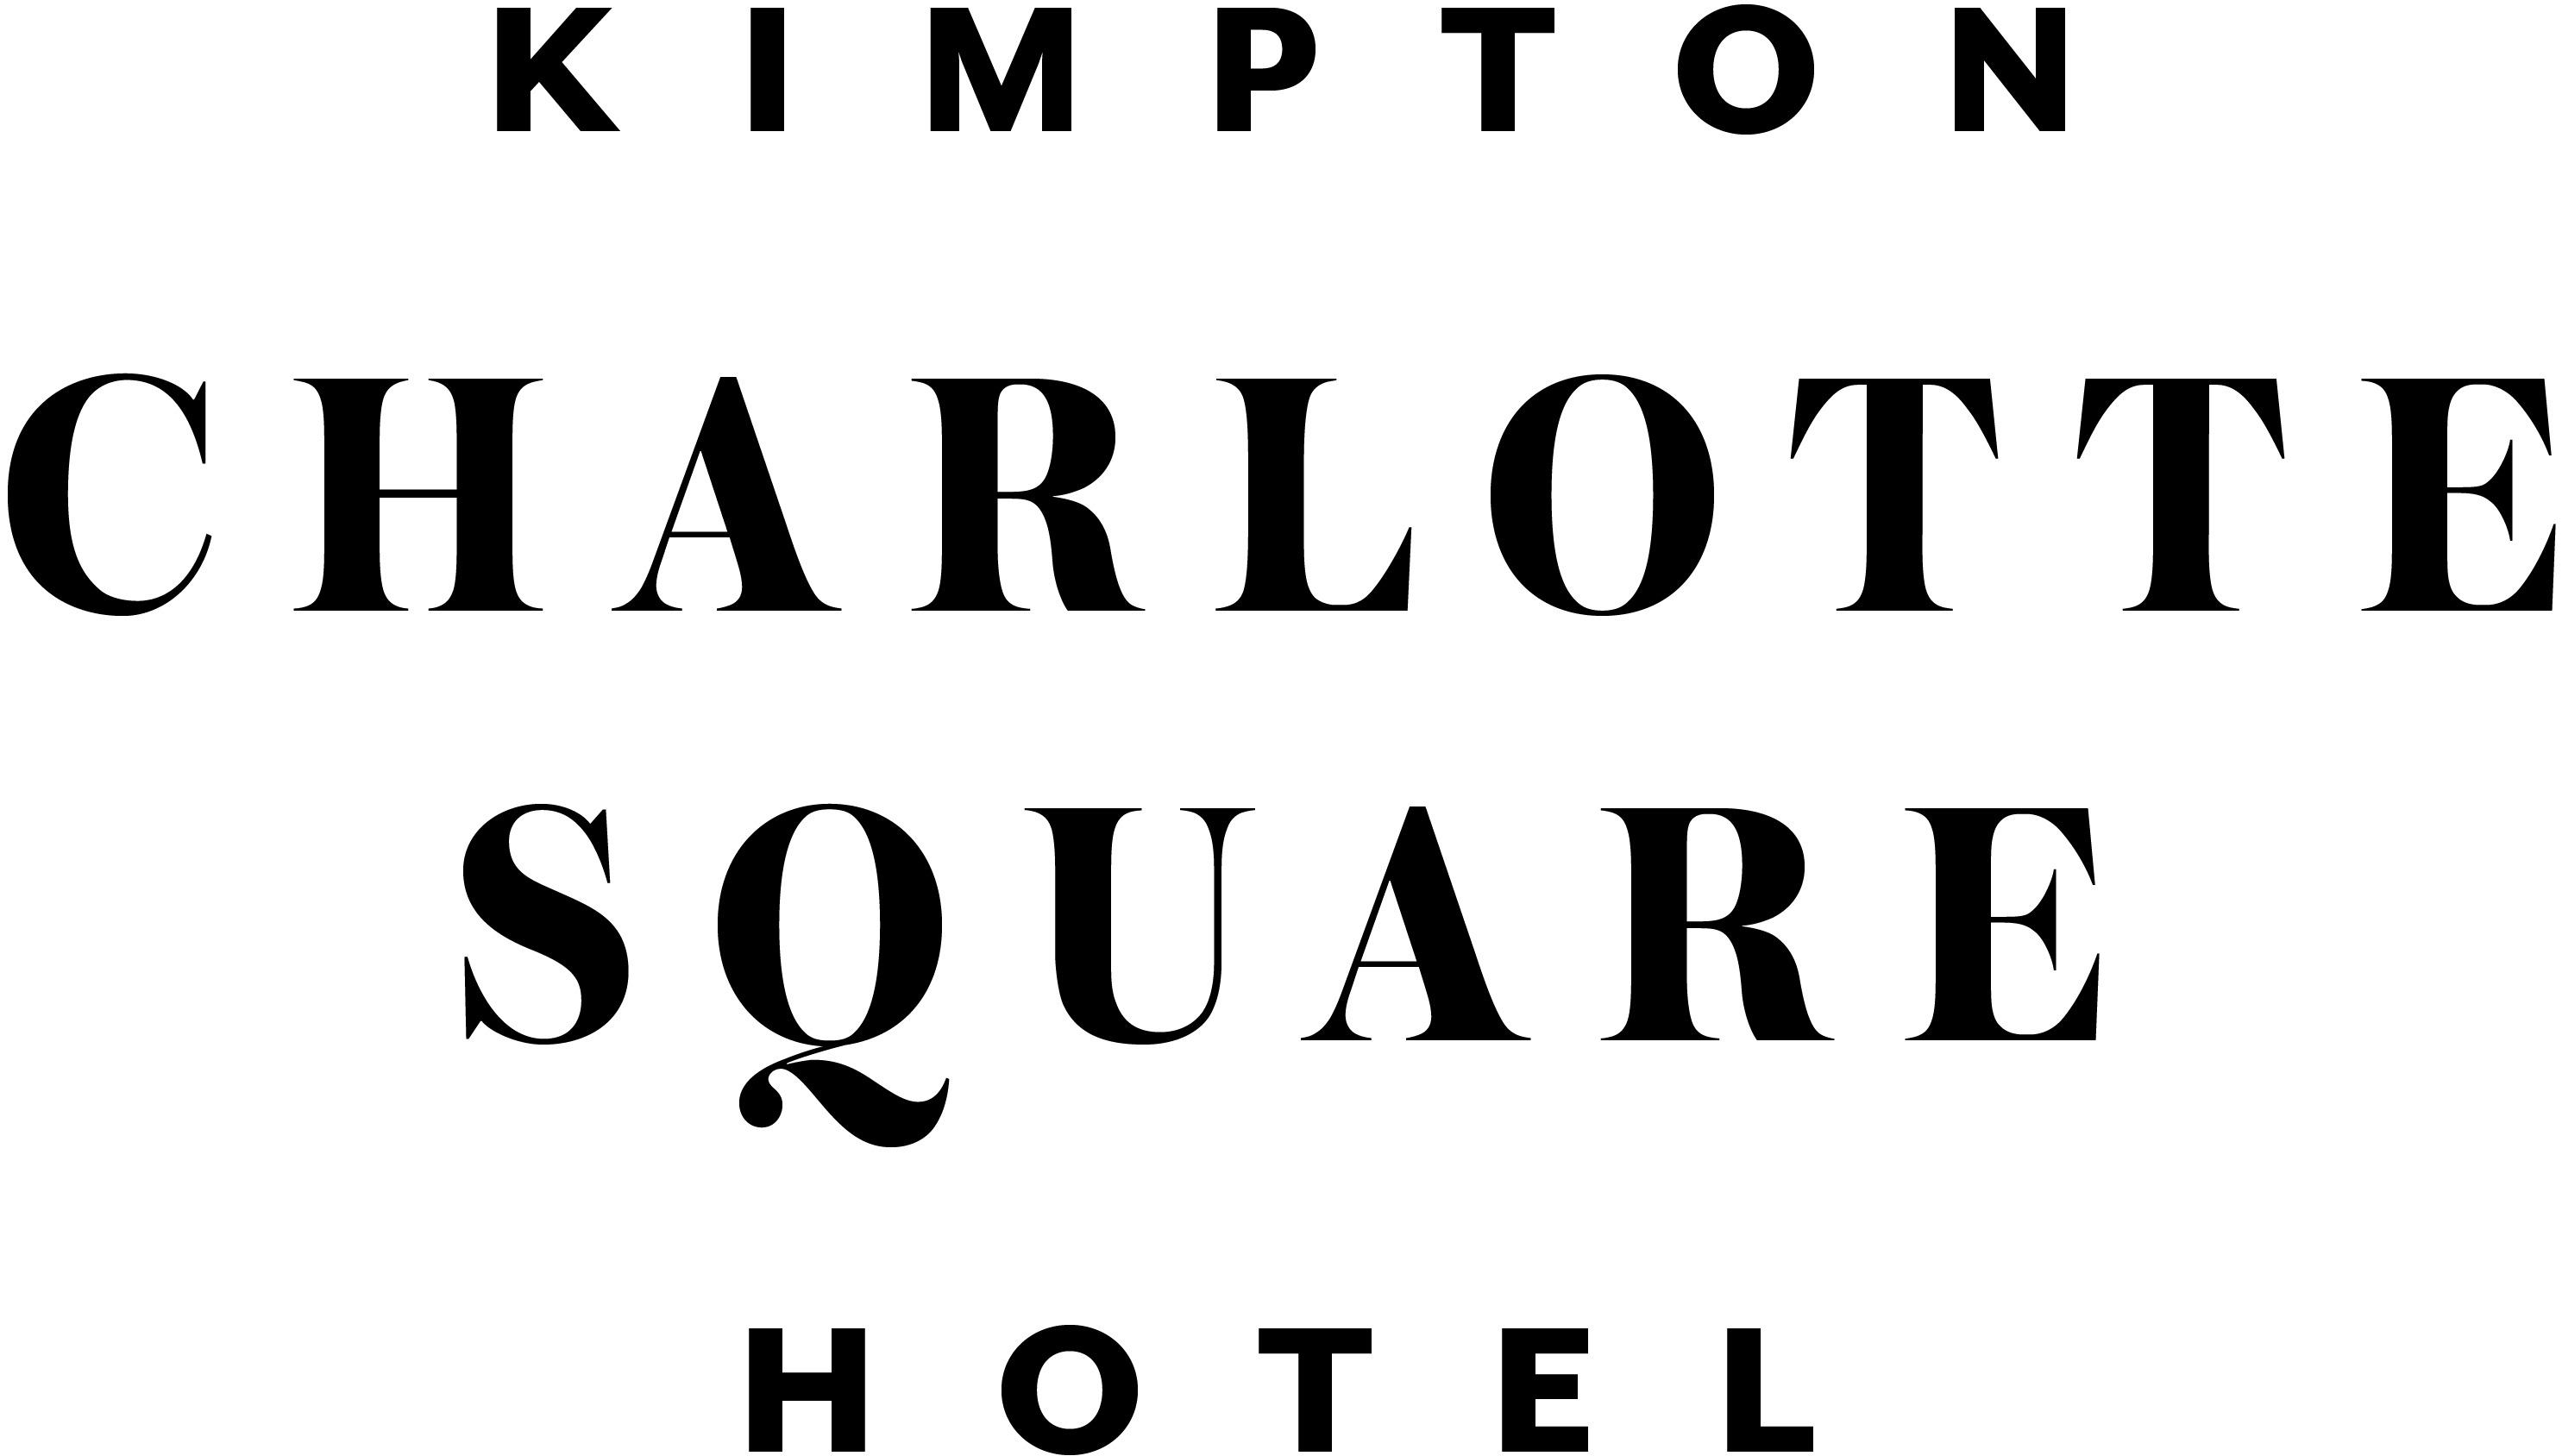 Kimpton Charlotte Square Hotel, The Gallery photo #4